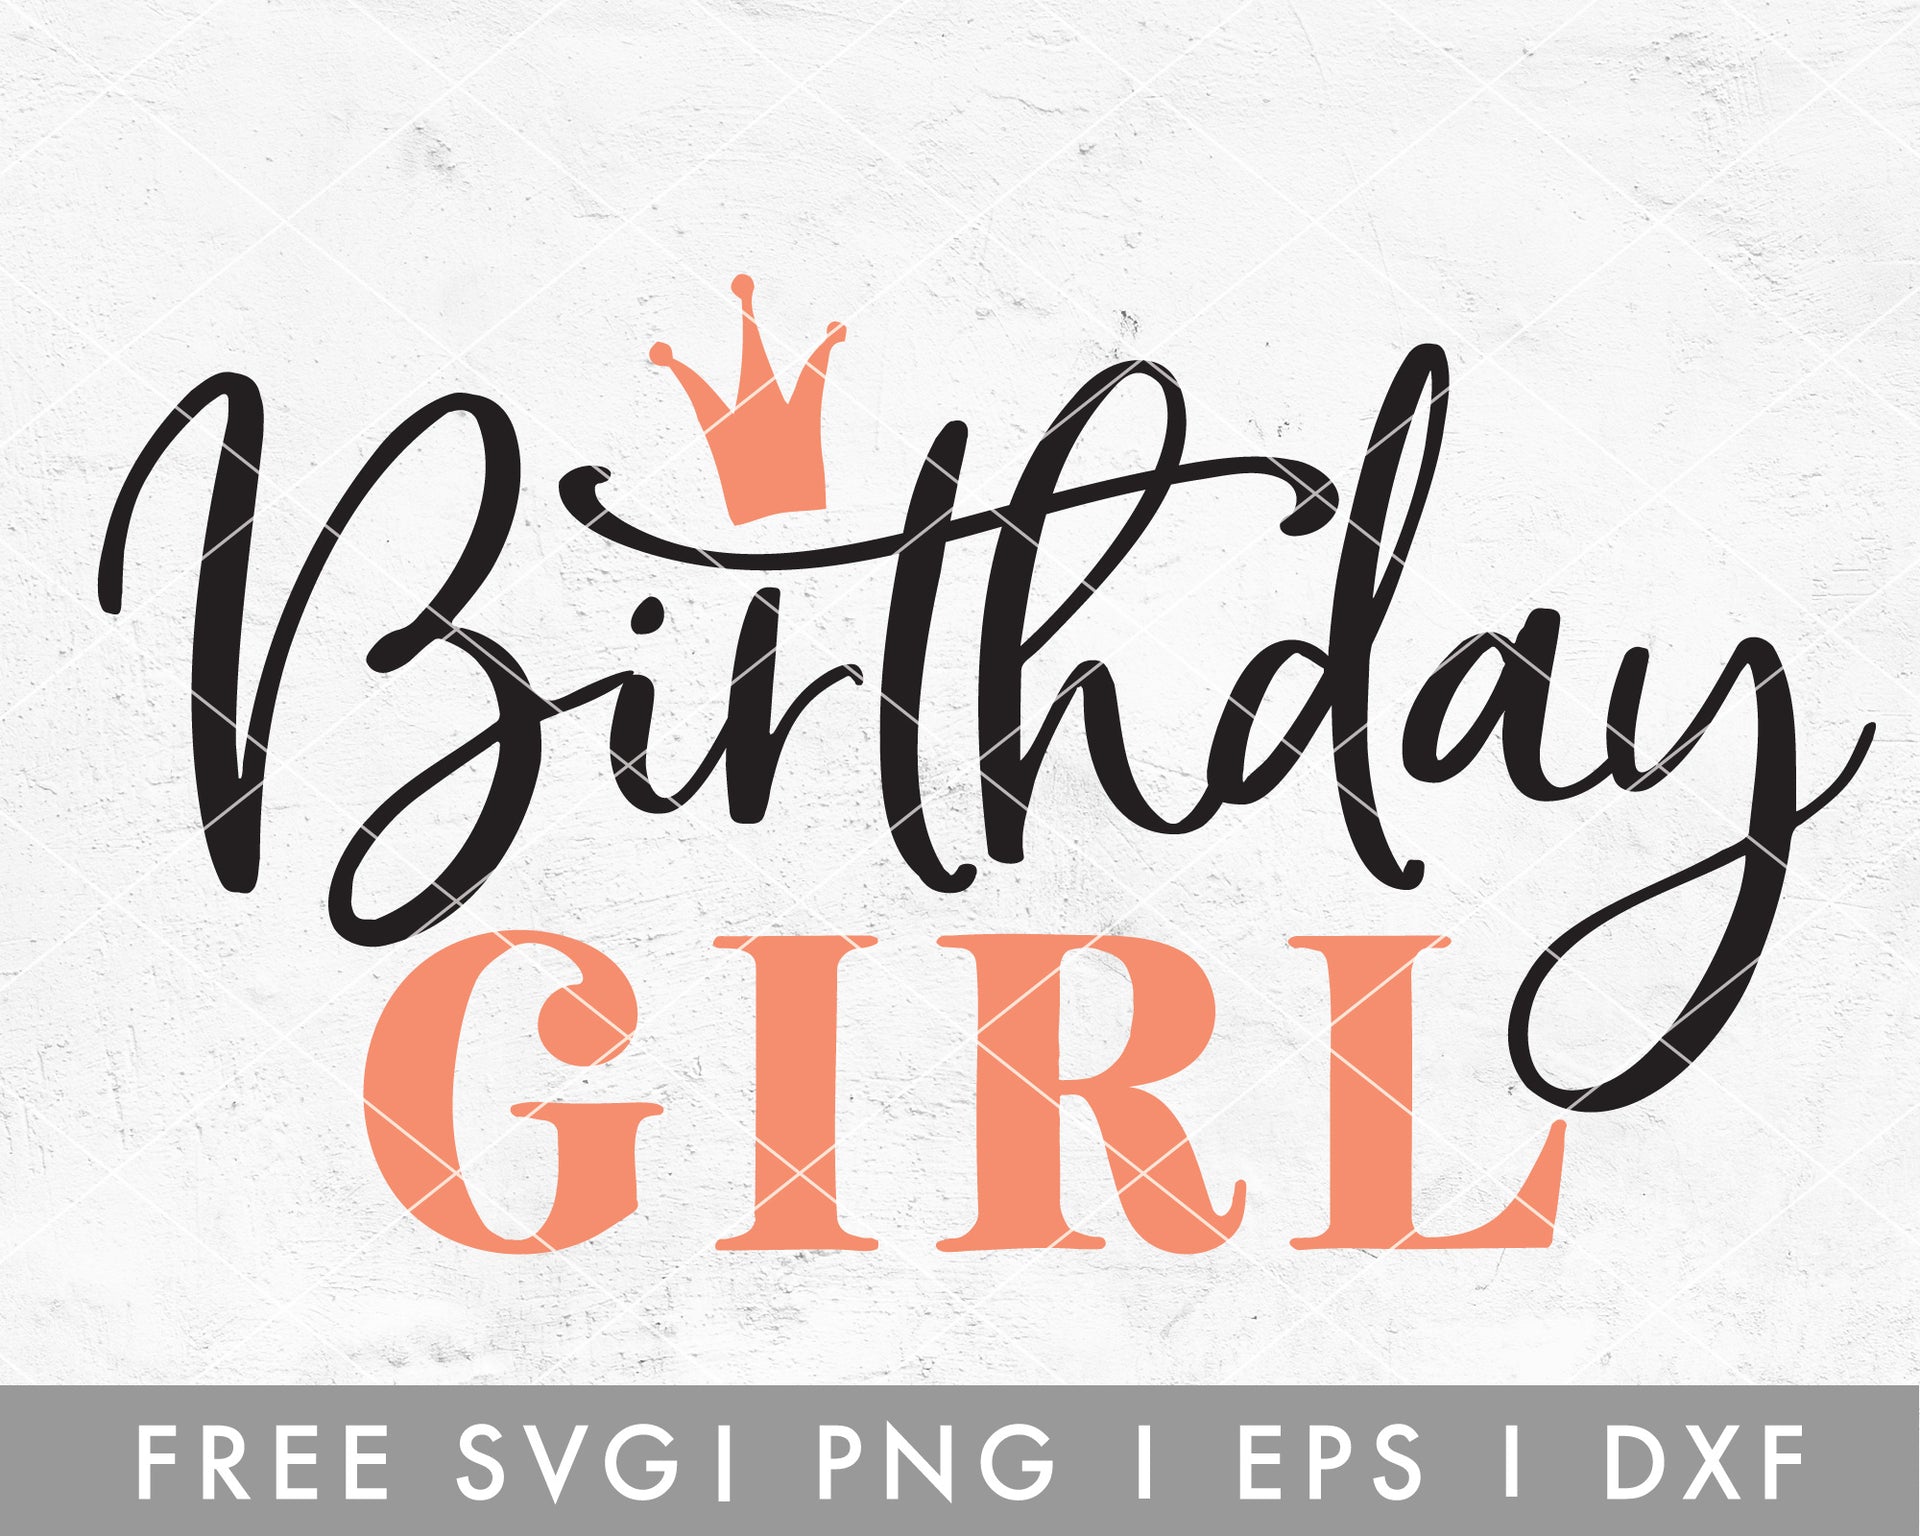 Birthday Girl Svg, Birthday Svg, Happy Birthday Svg - Crella